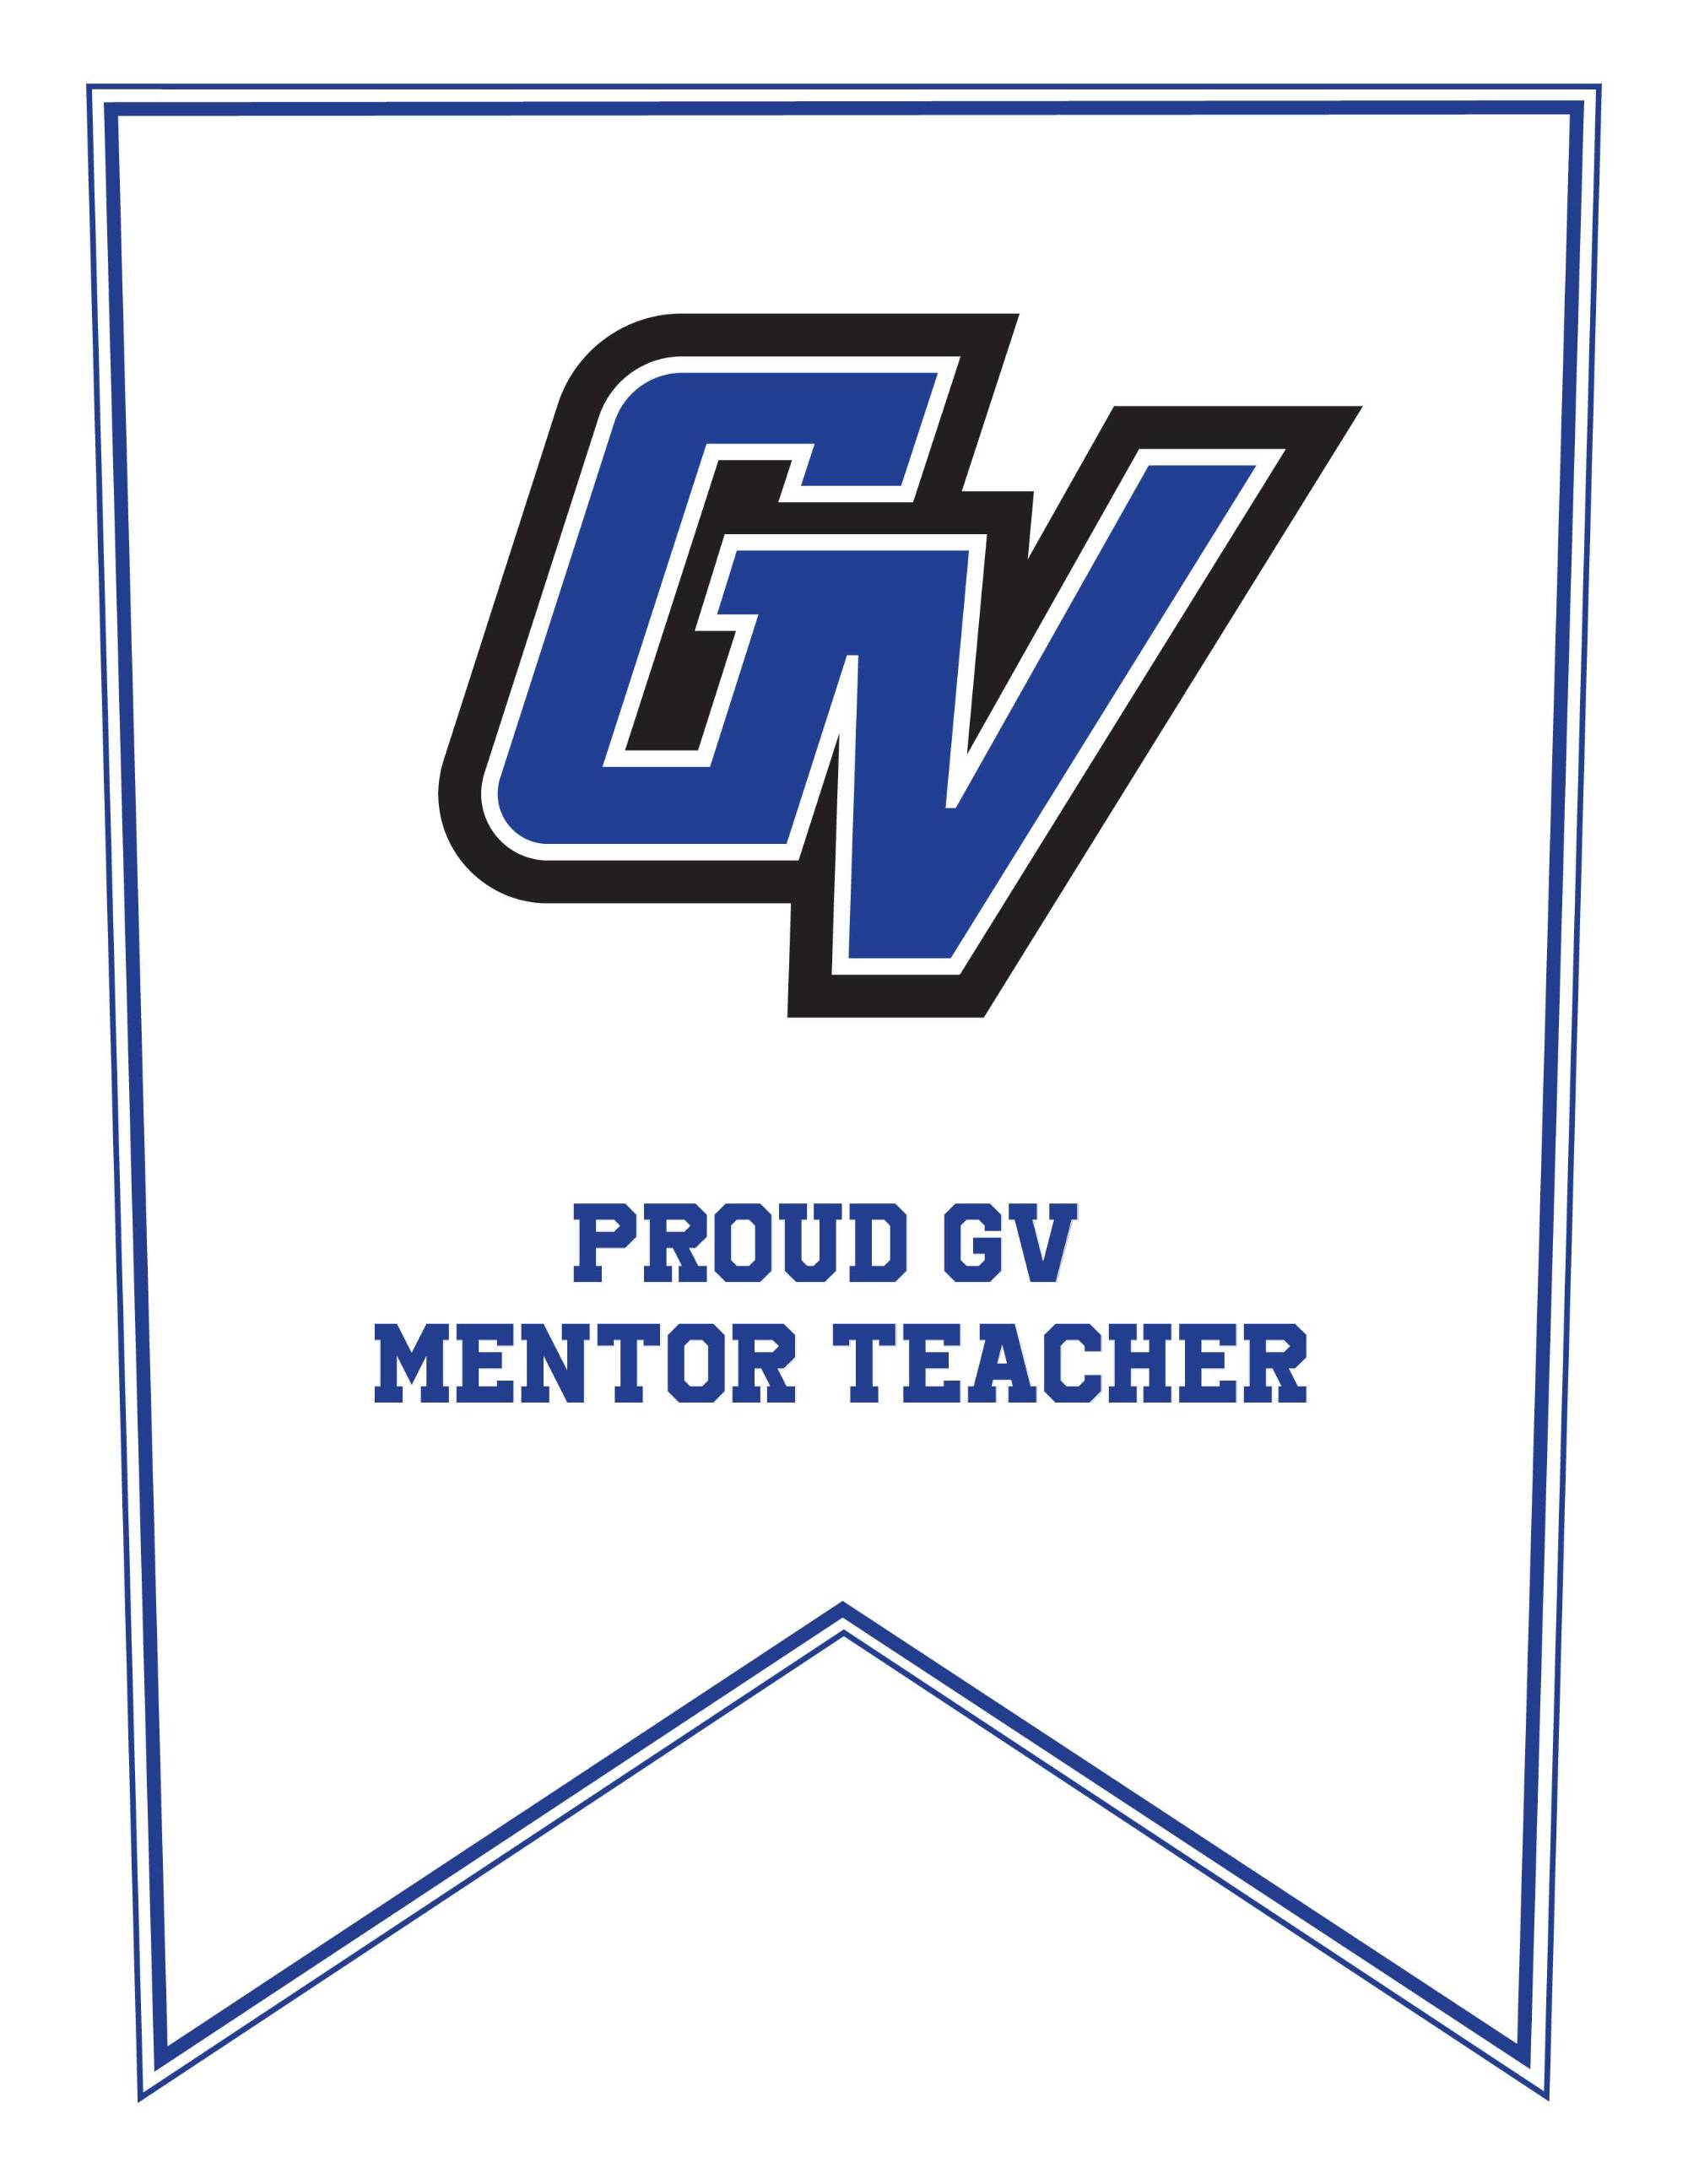 Proud teacher mentor GVSU pennants white